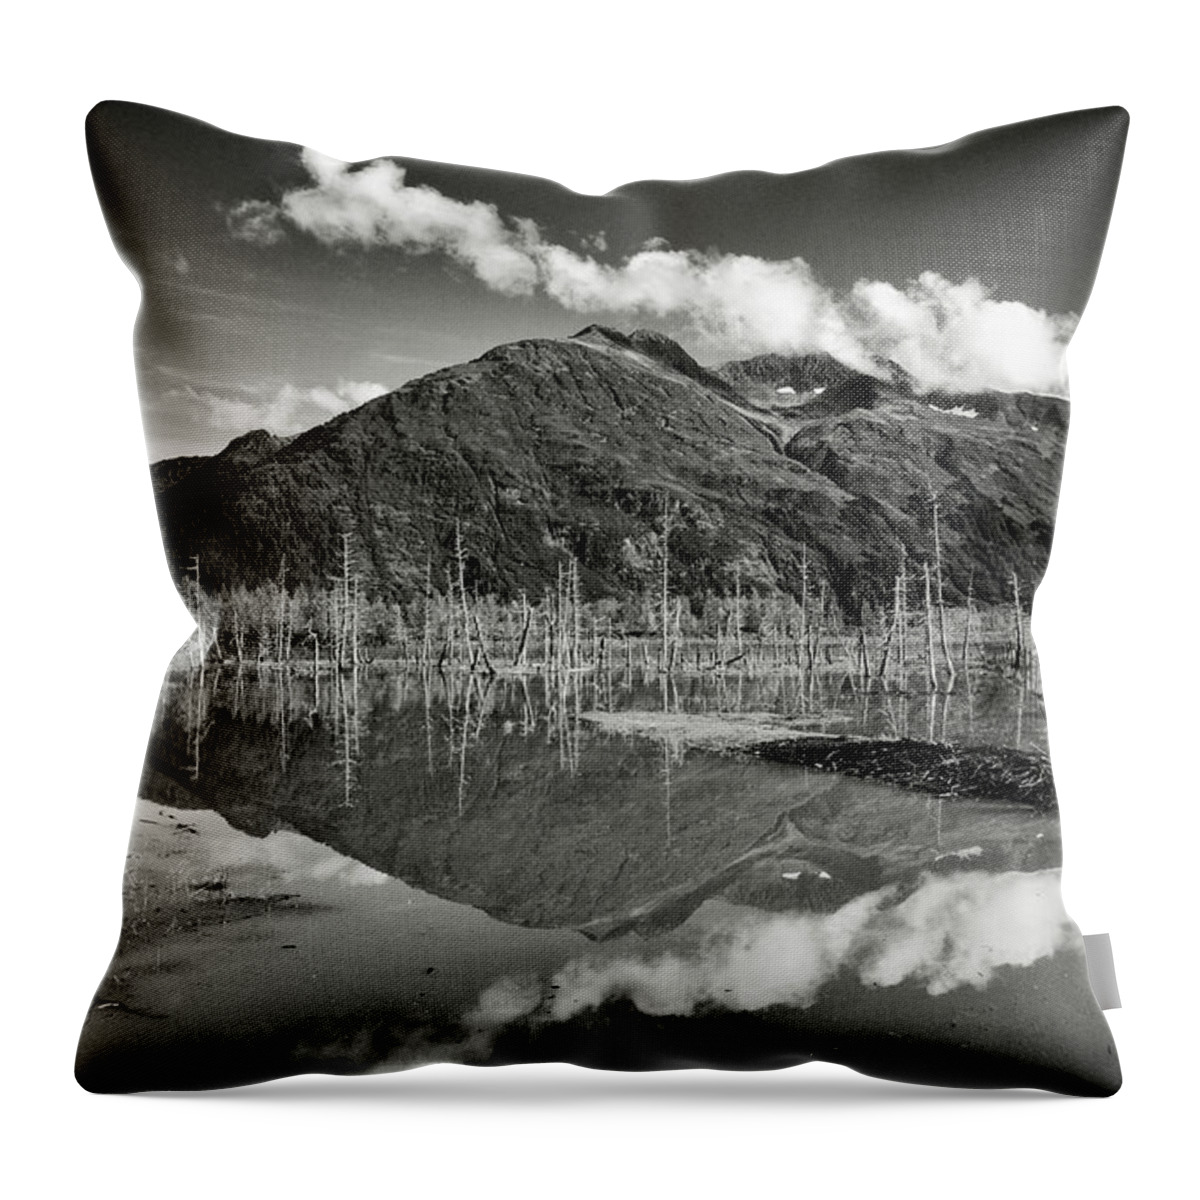 Alaska Wilderness Throw Pillow featuring the photograph Turnagain Arm Alaska by Donald Pash